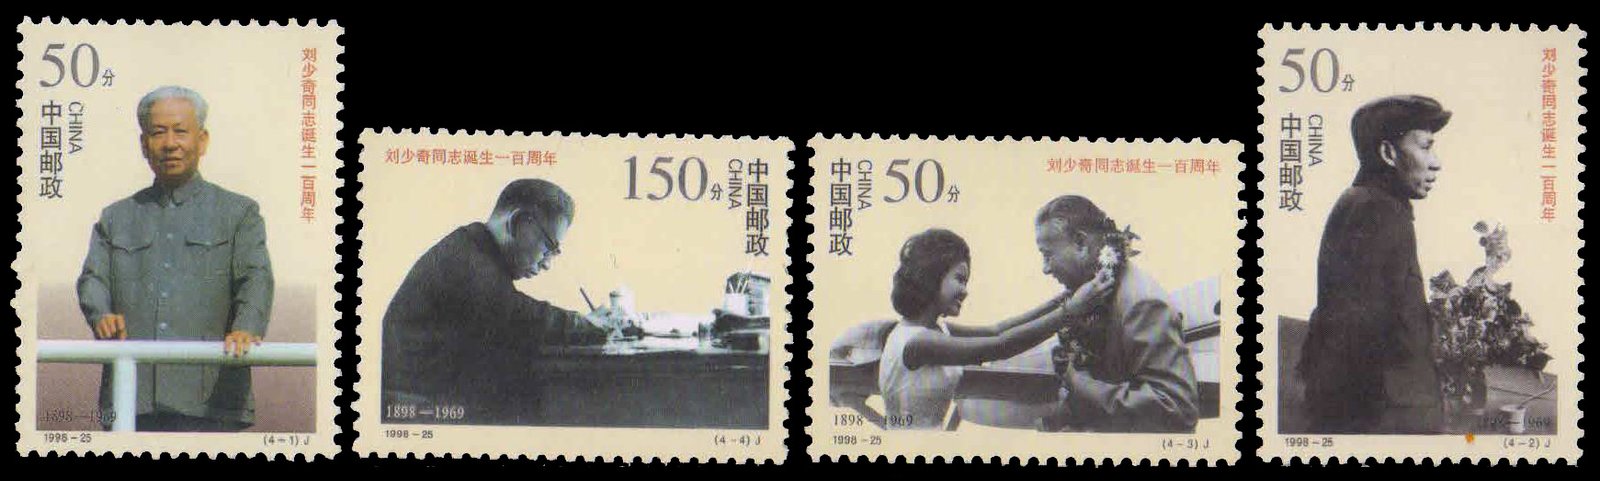 CHINA PEOPLE REPUBLIC 1998-Birth Cent. of Lu Shaogi Chairman of Republic 1959-68, Set of 4, MNH, S.G. 4339-4342